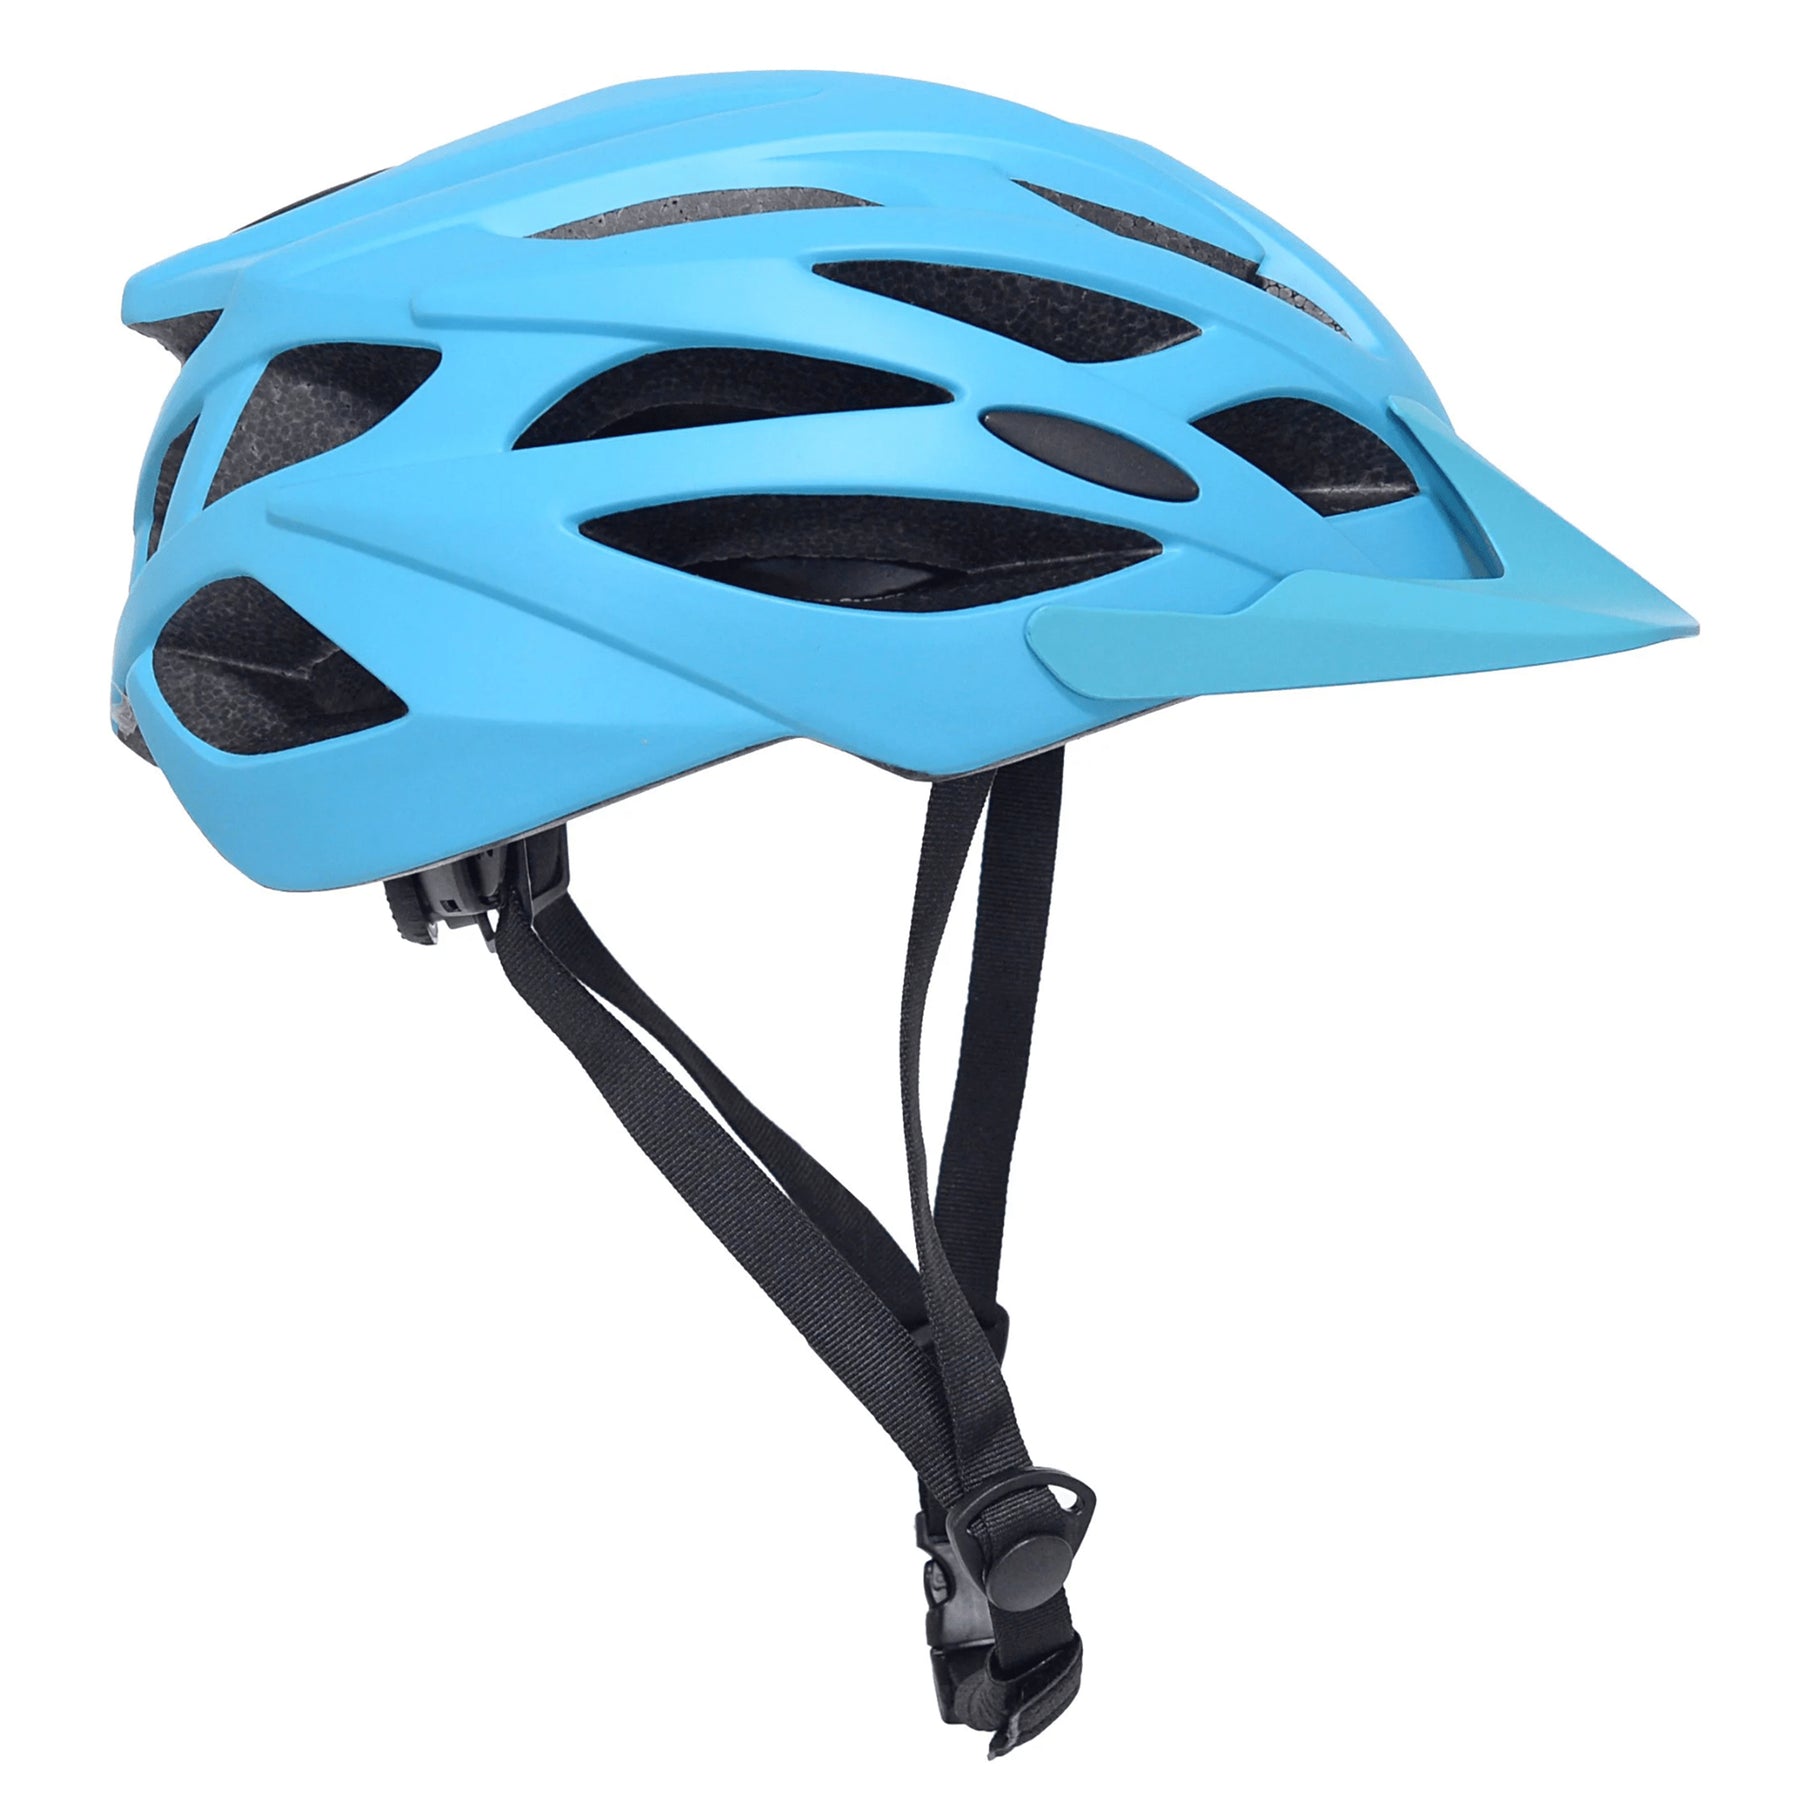 Kent Adult Bike Helmet | Helmet for Adults Ages 13+